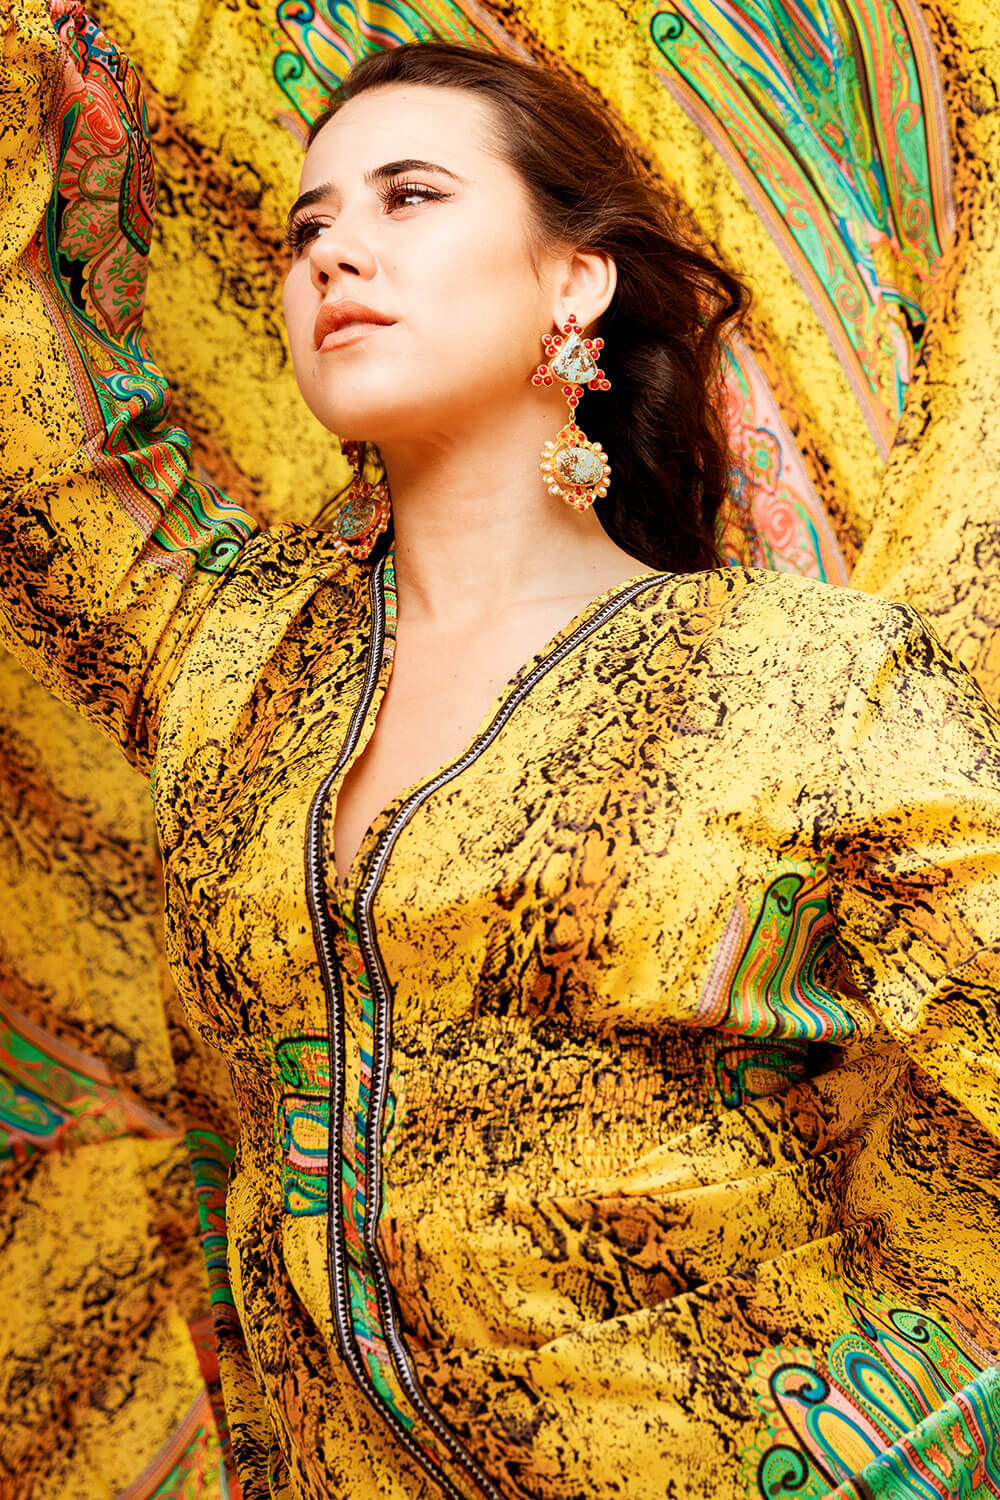 Portrait photo of model in yellow dress by Scott Stramyk